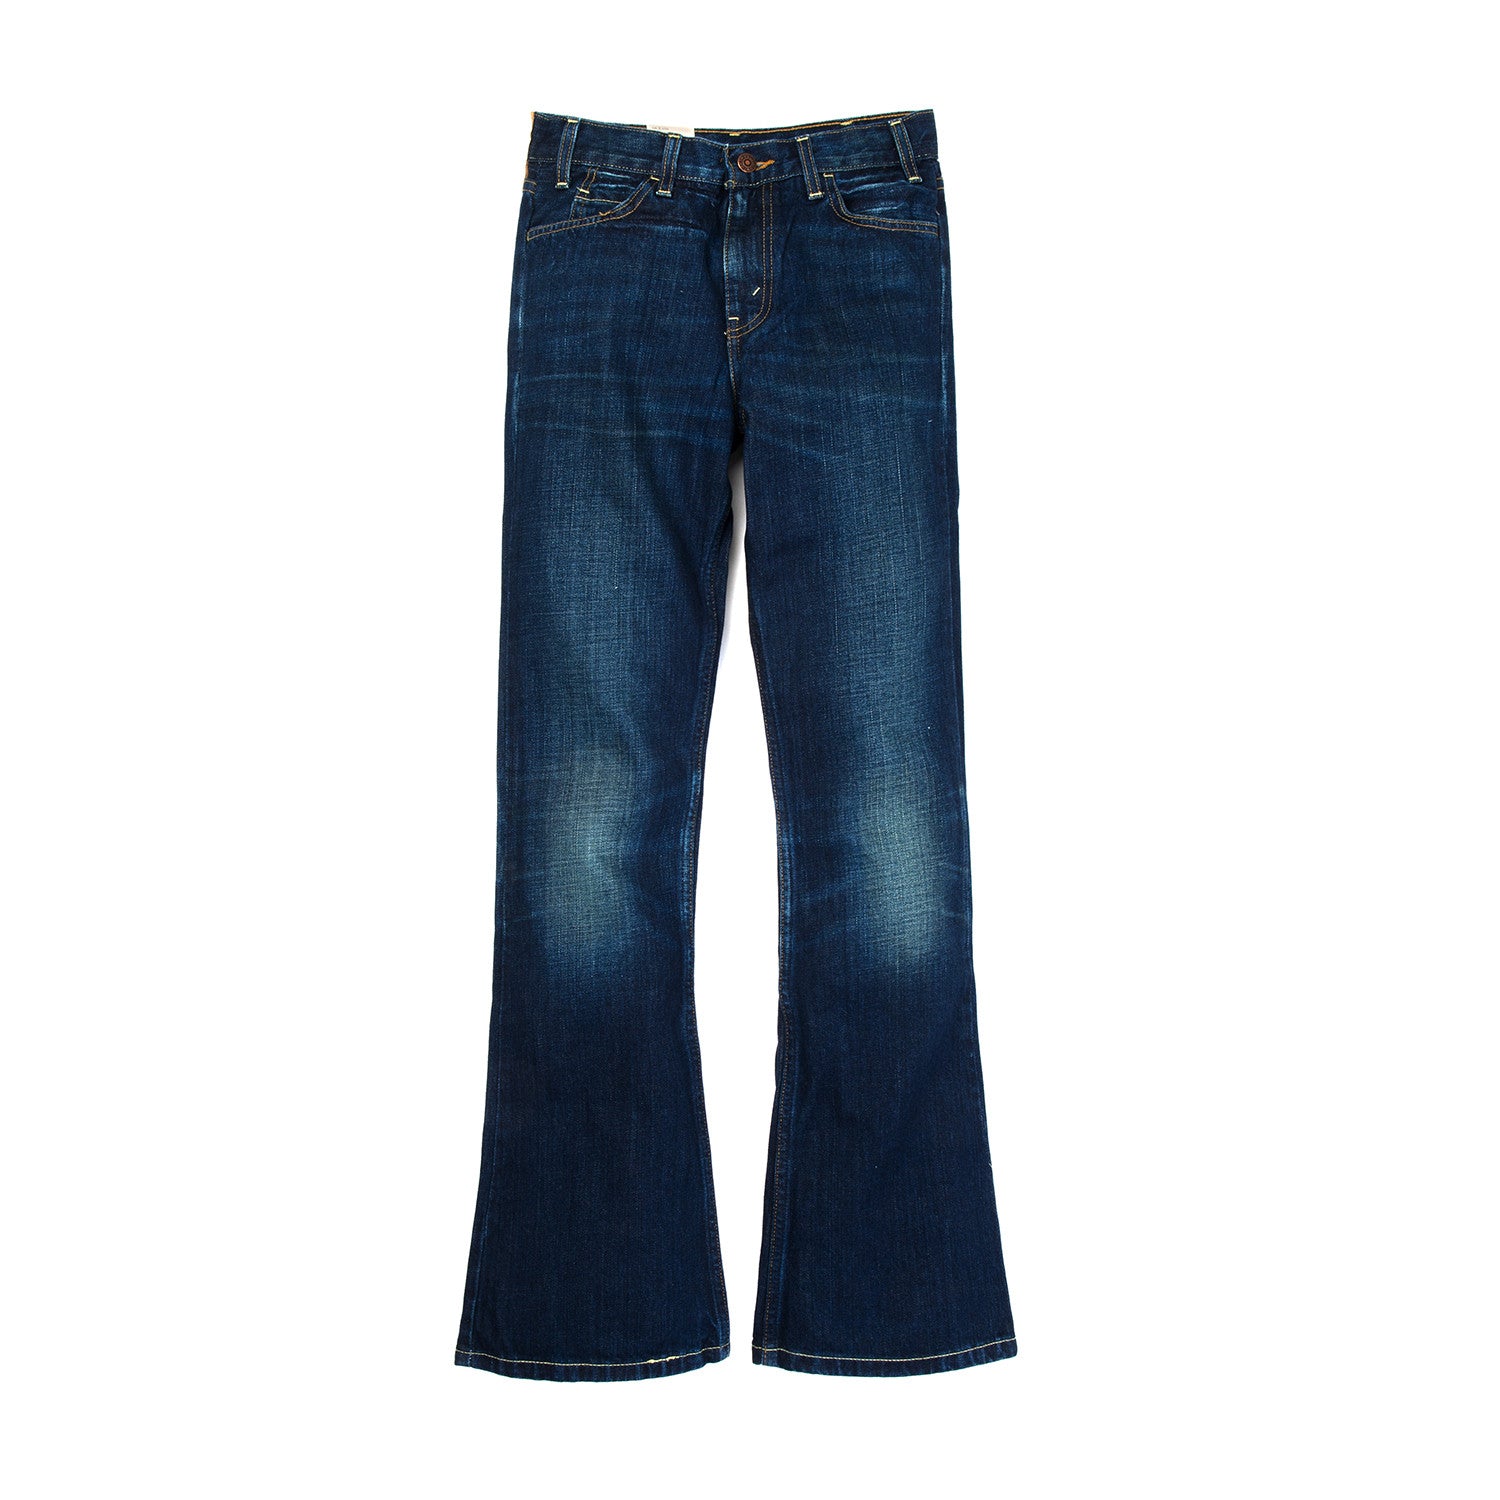 levi's vintage flare jeans